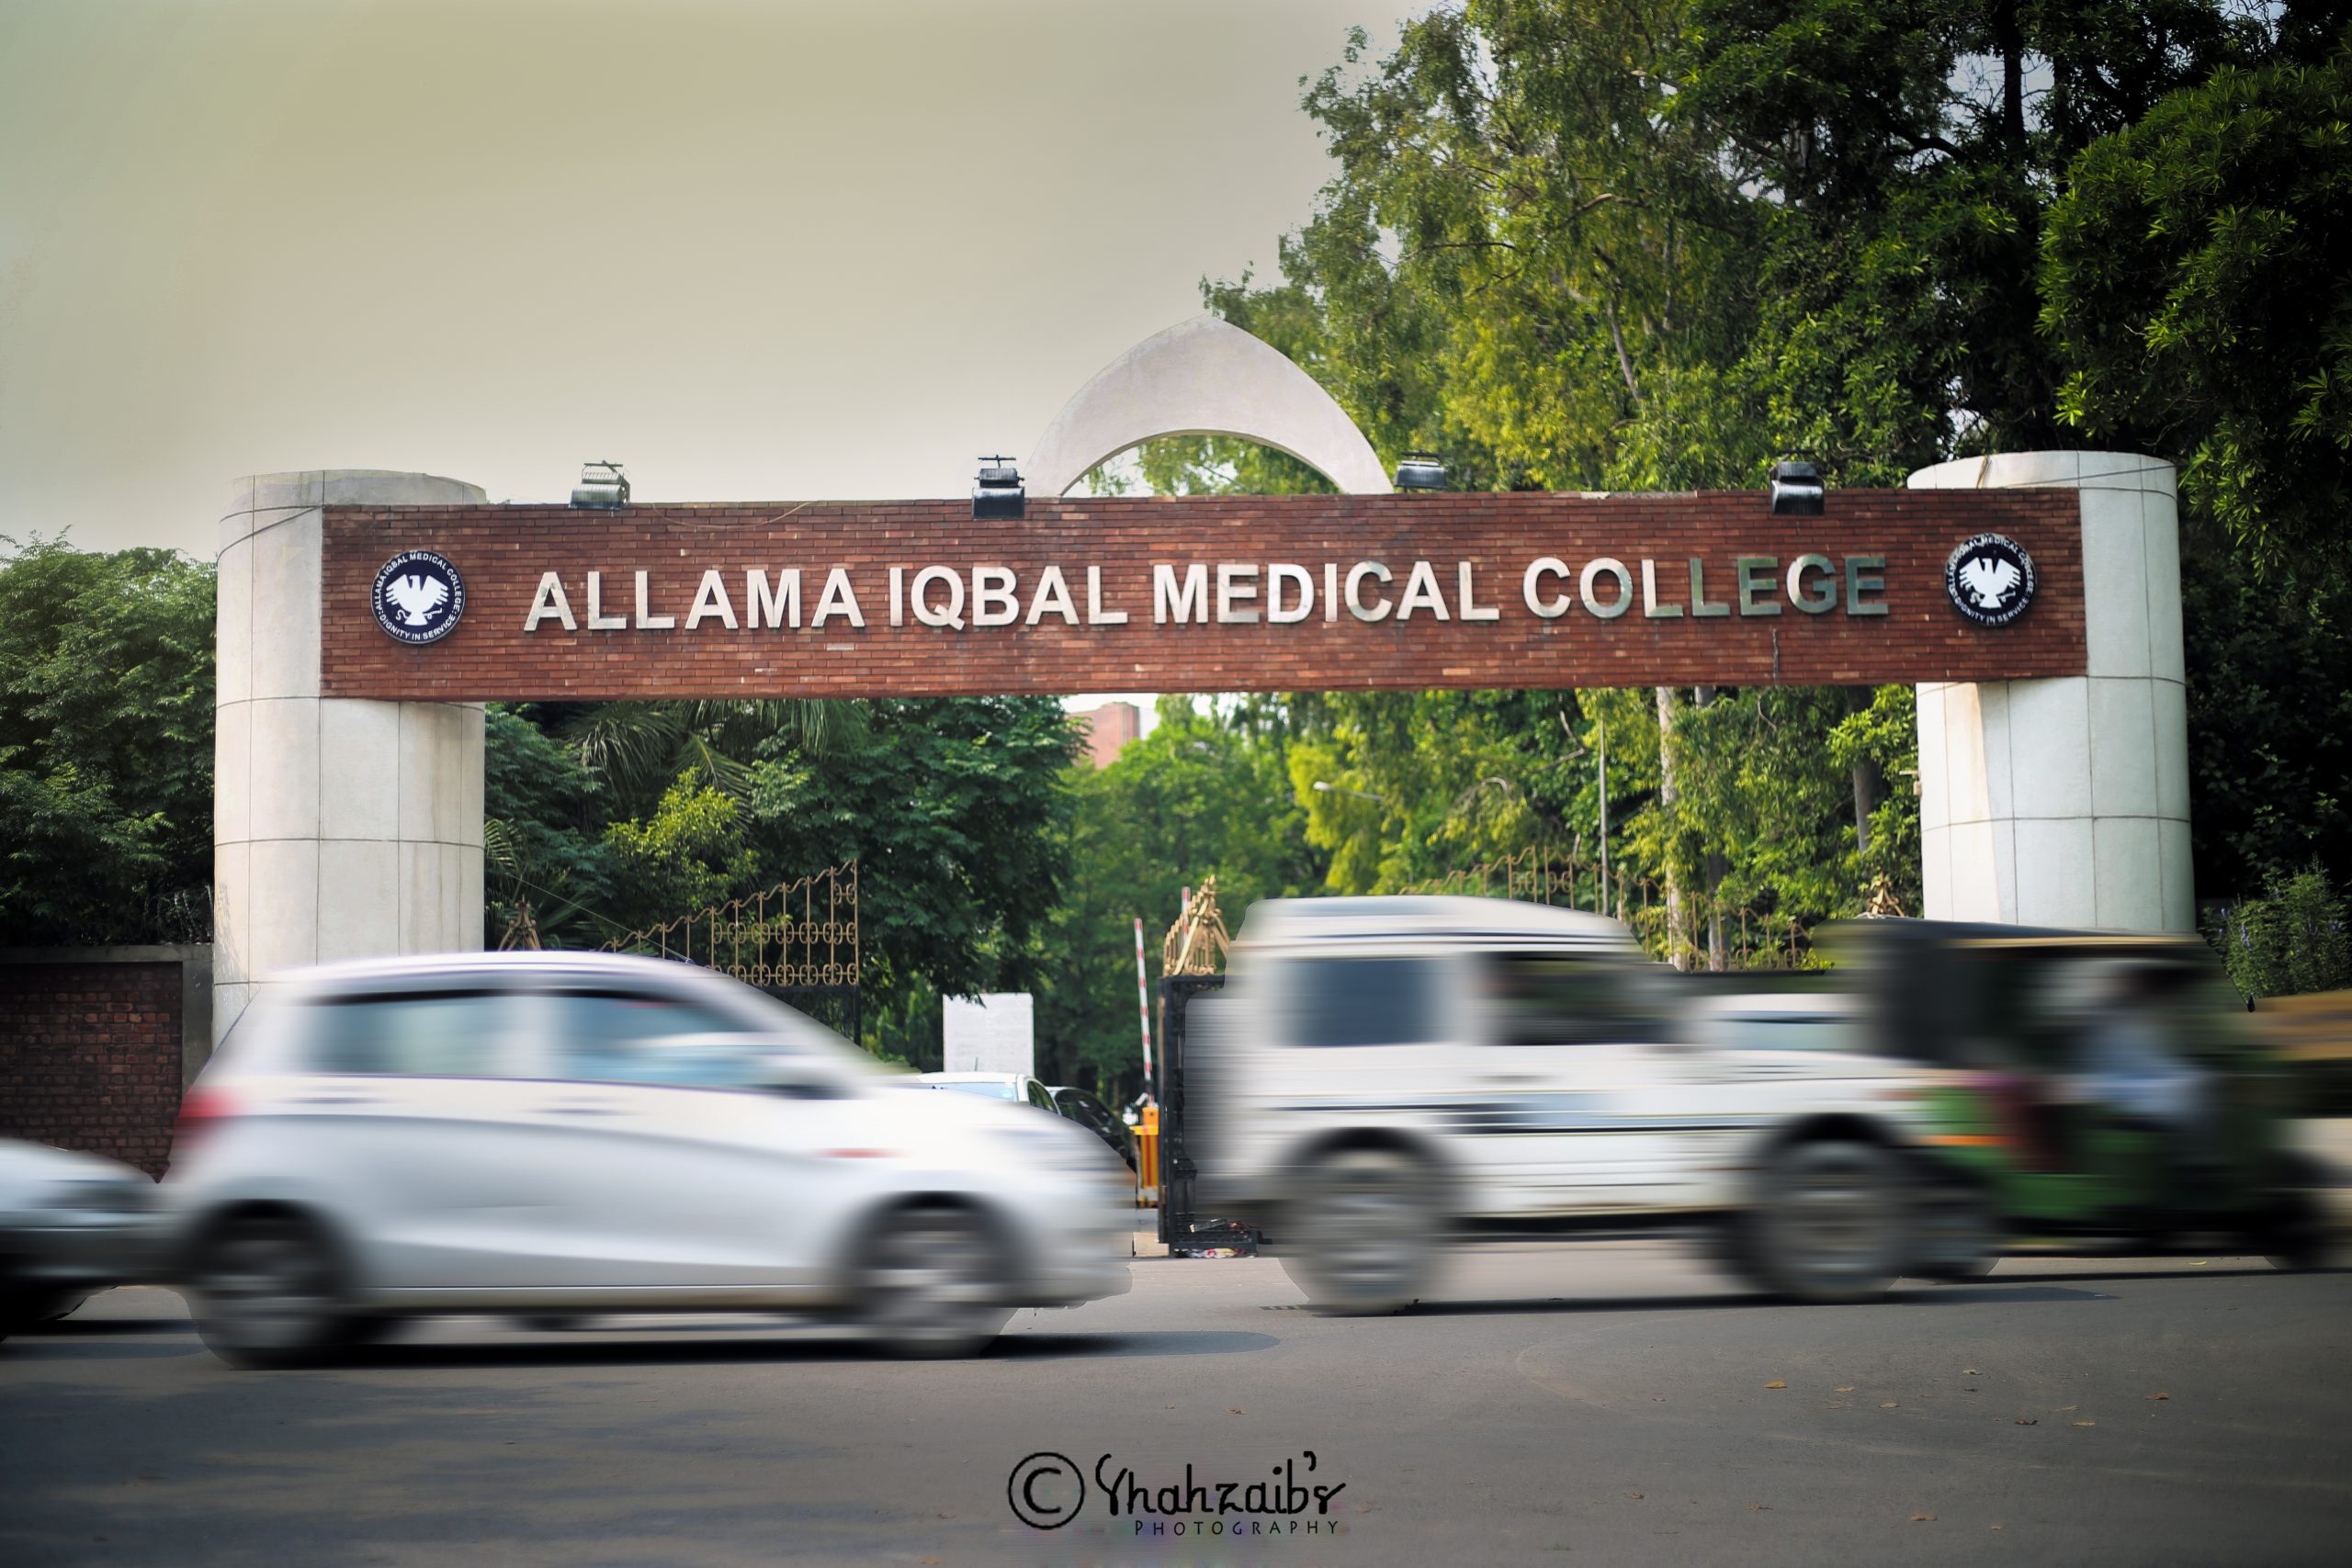 Gallery Allama Iqbal Medical College